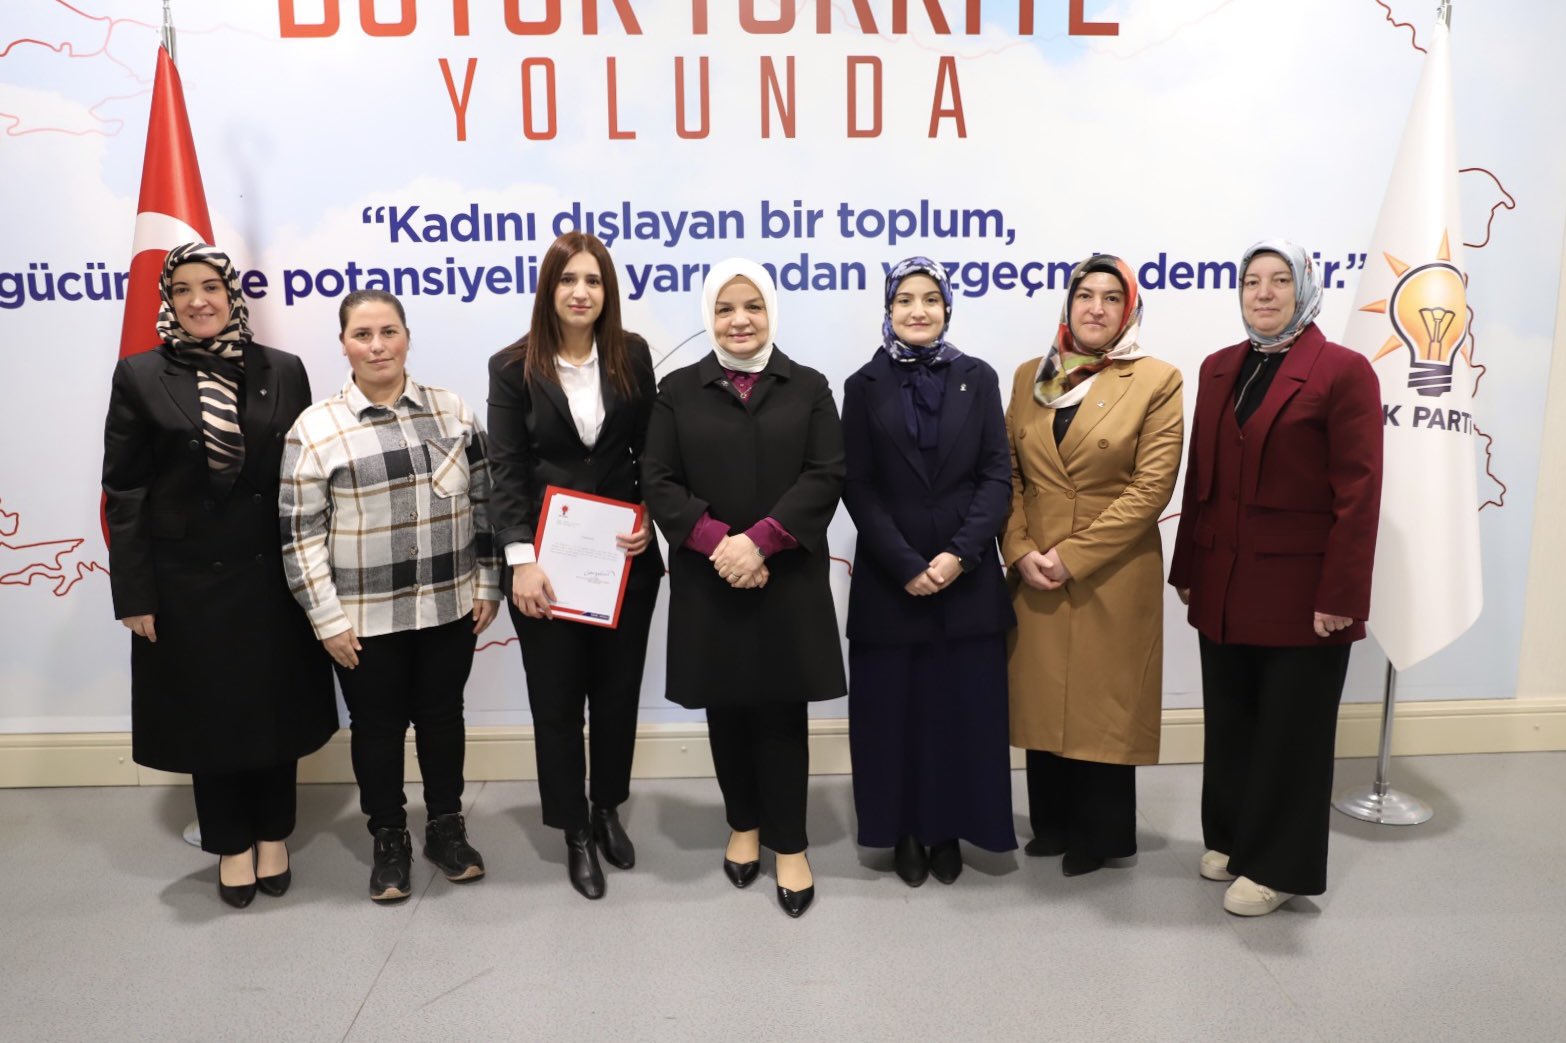 Yerköy ilçemizde, AK Parti Kadın